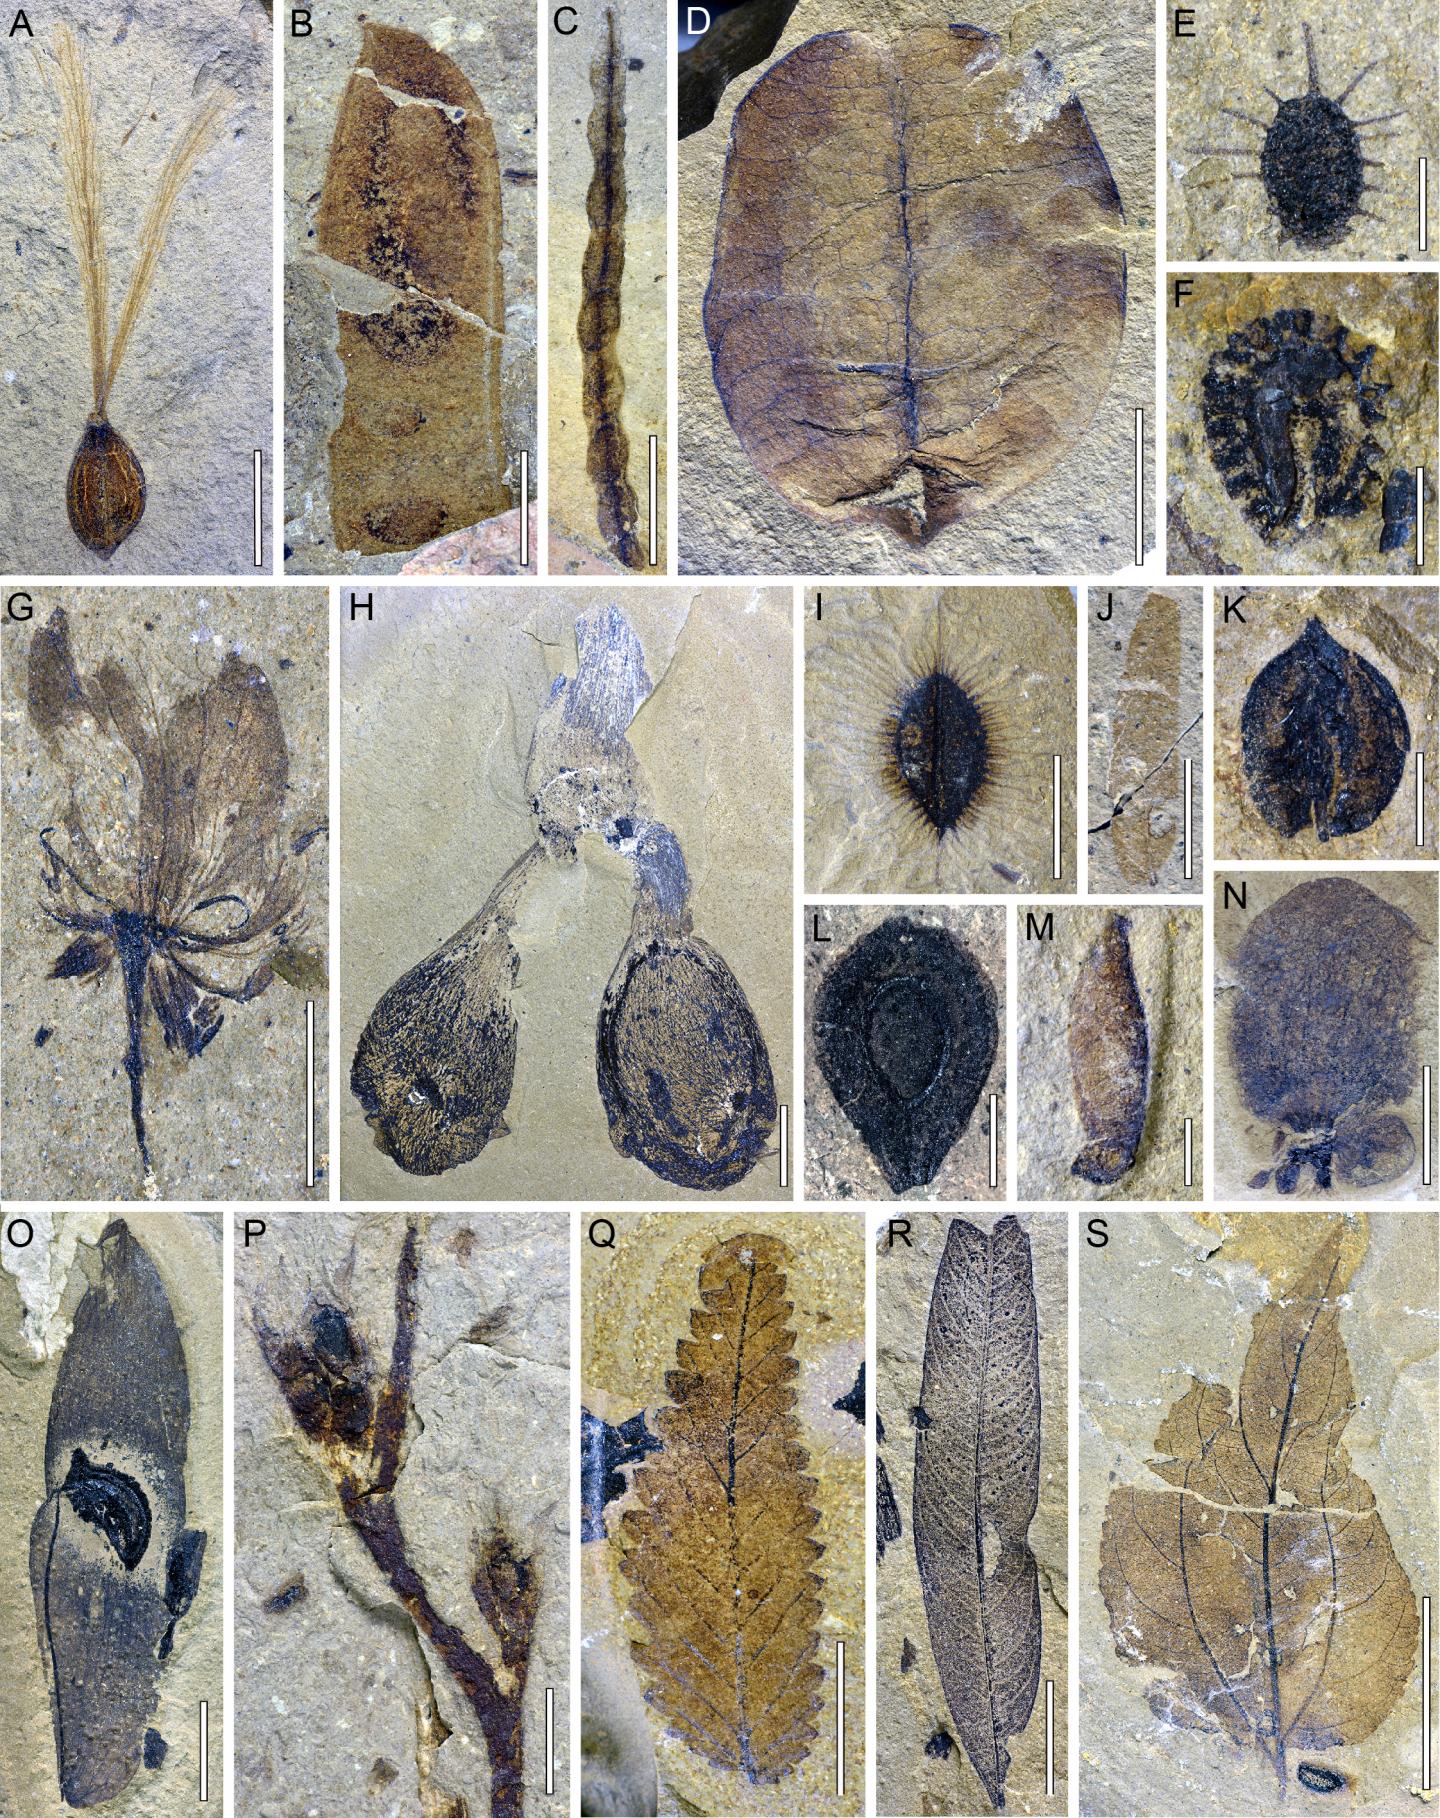 Selected fossil plant taxa